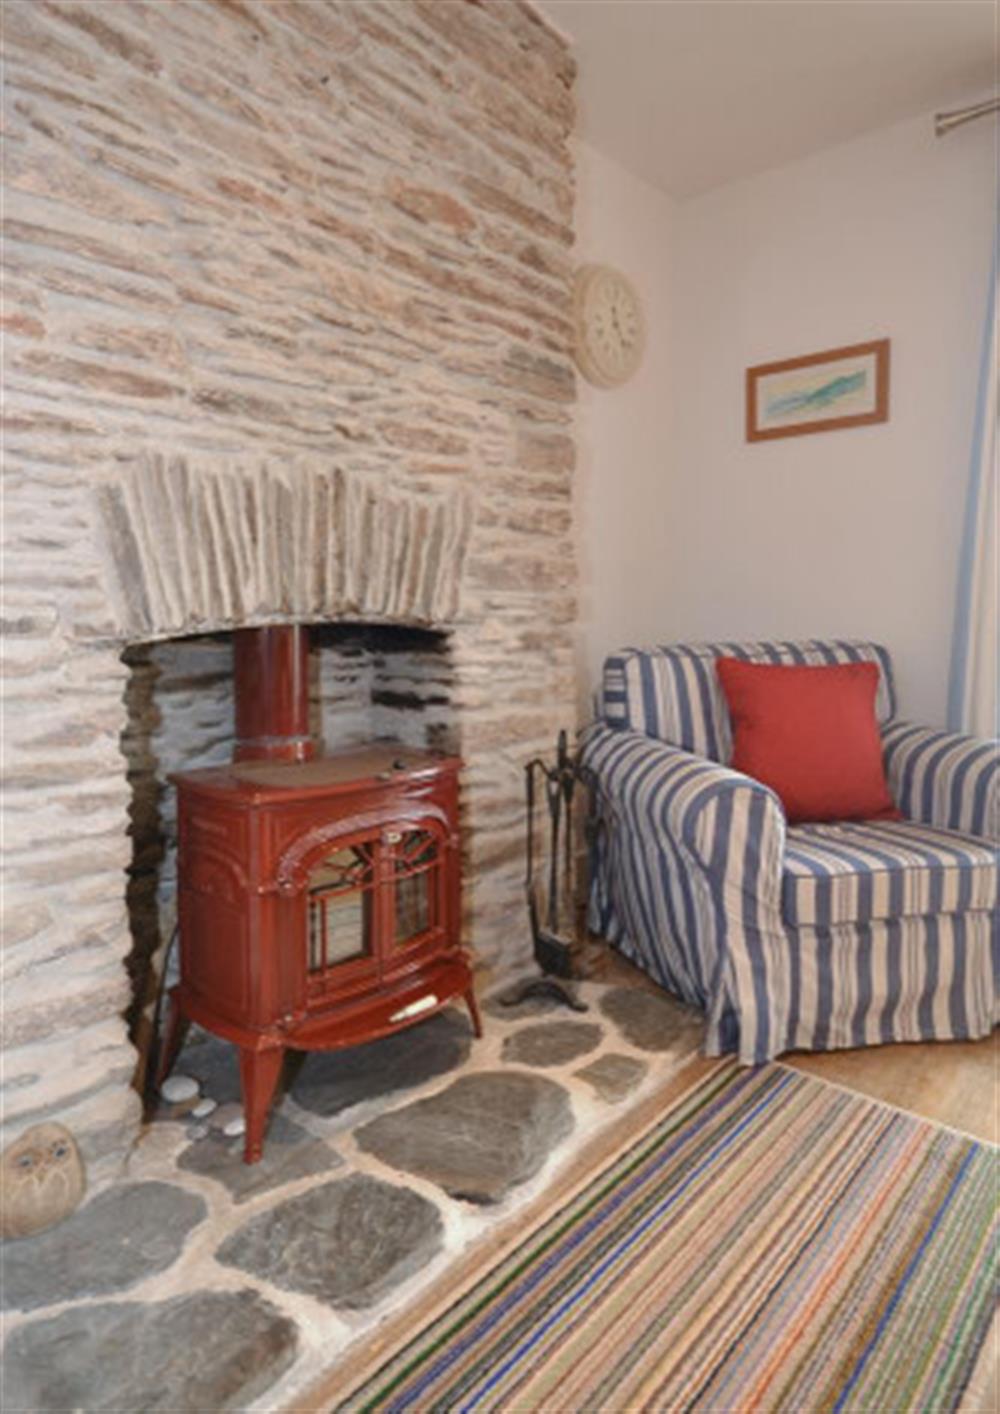 Shingle House fireplace_R at Shingle House in Torcross